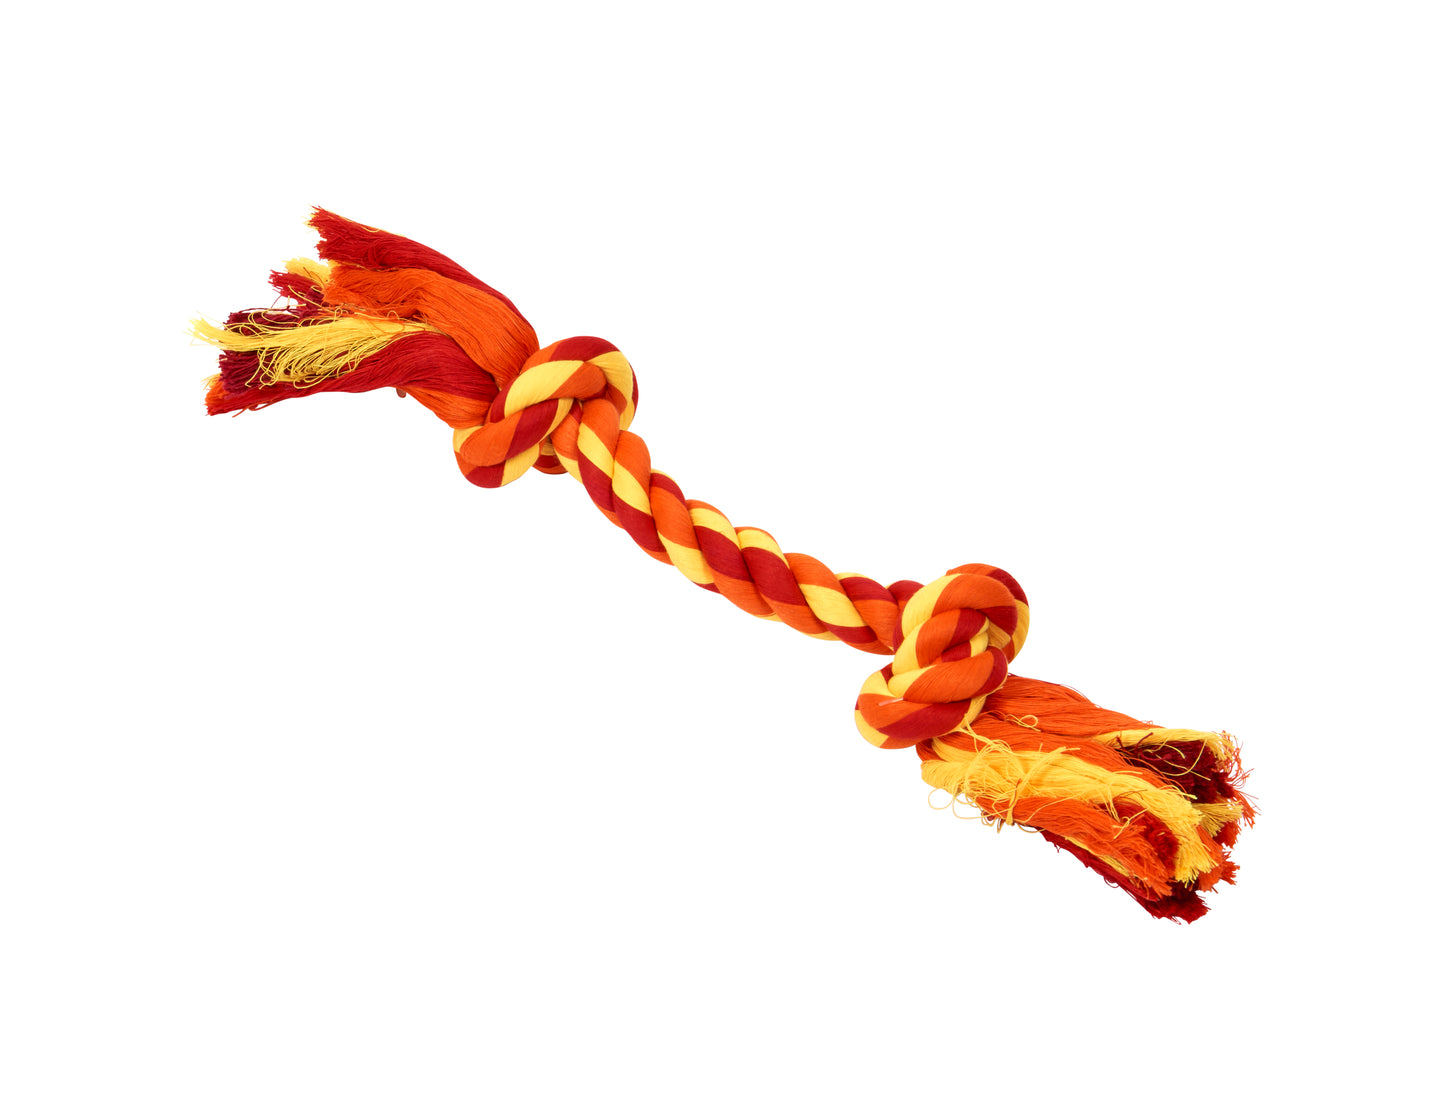 BUSTER Colour Dental Rope 2-Knot, rød/orange/gul, L, 35 cm18